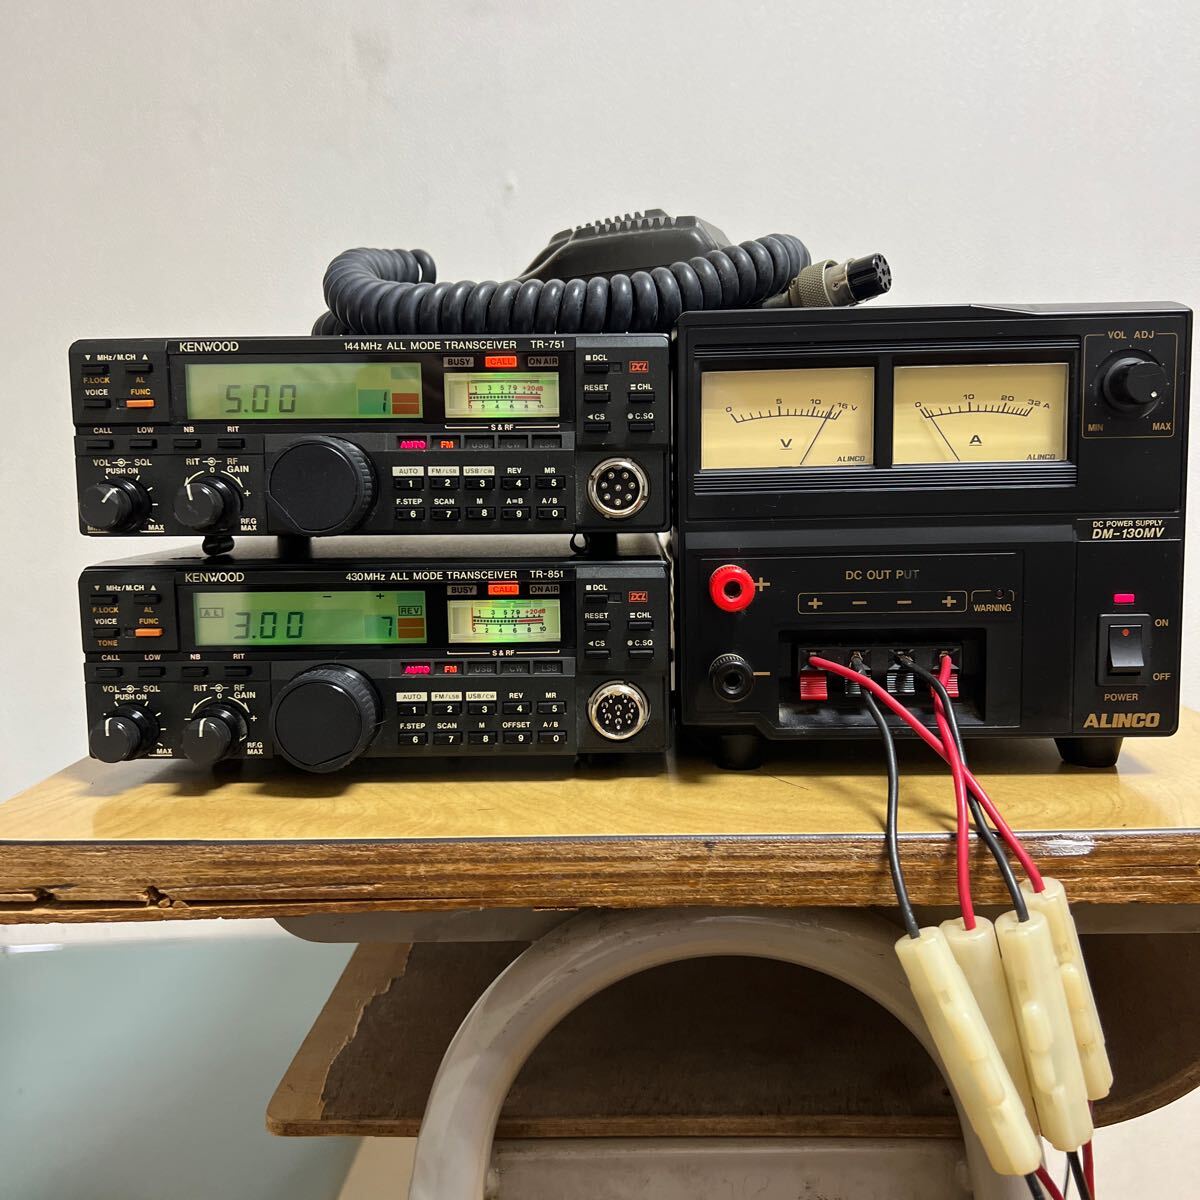 KENWOOD TR751(144MHz).TR851(430MHz). Alinco DC power DM130MV transceiver set 